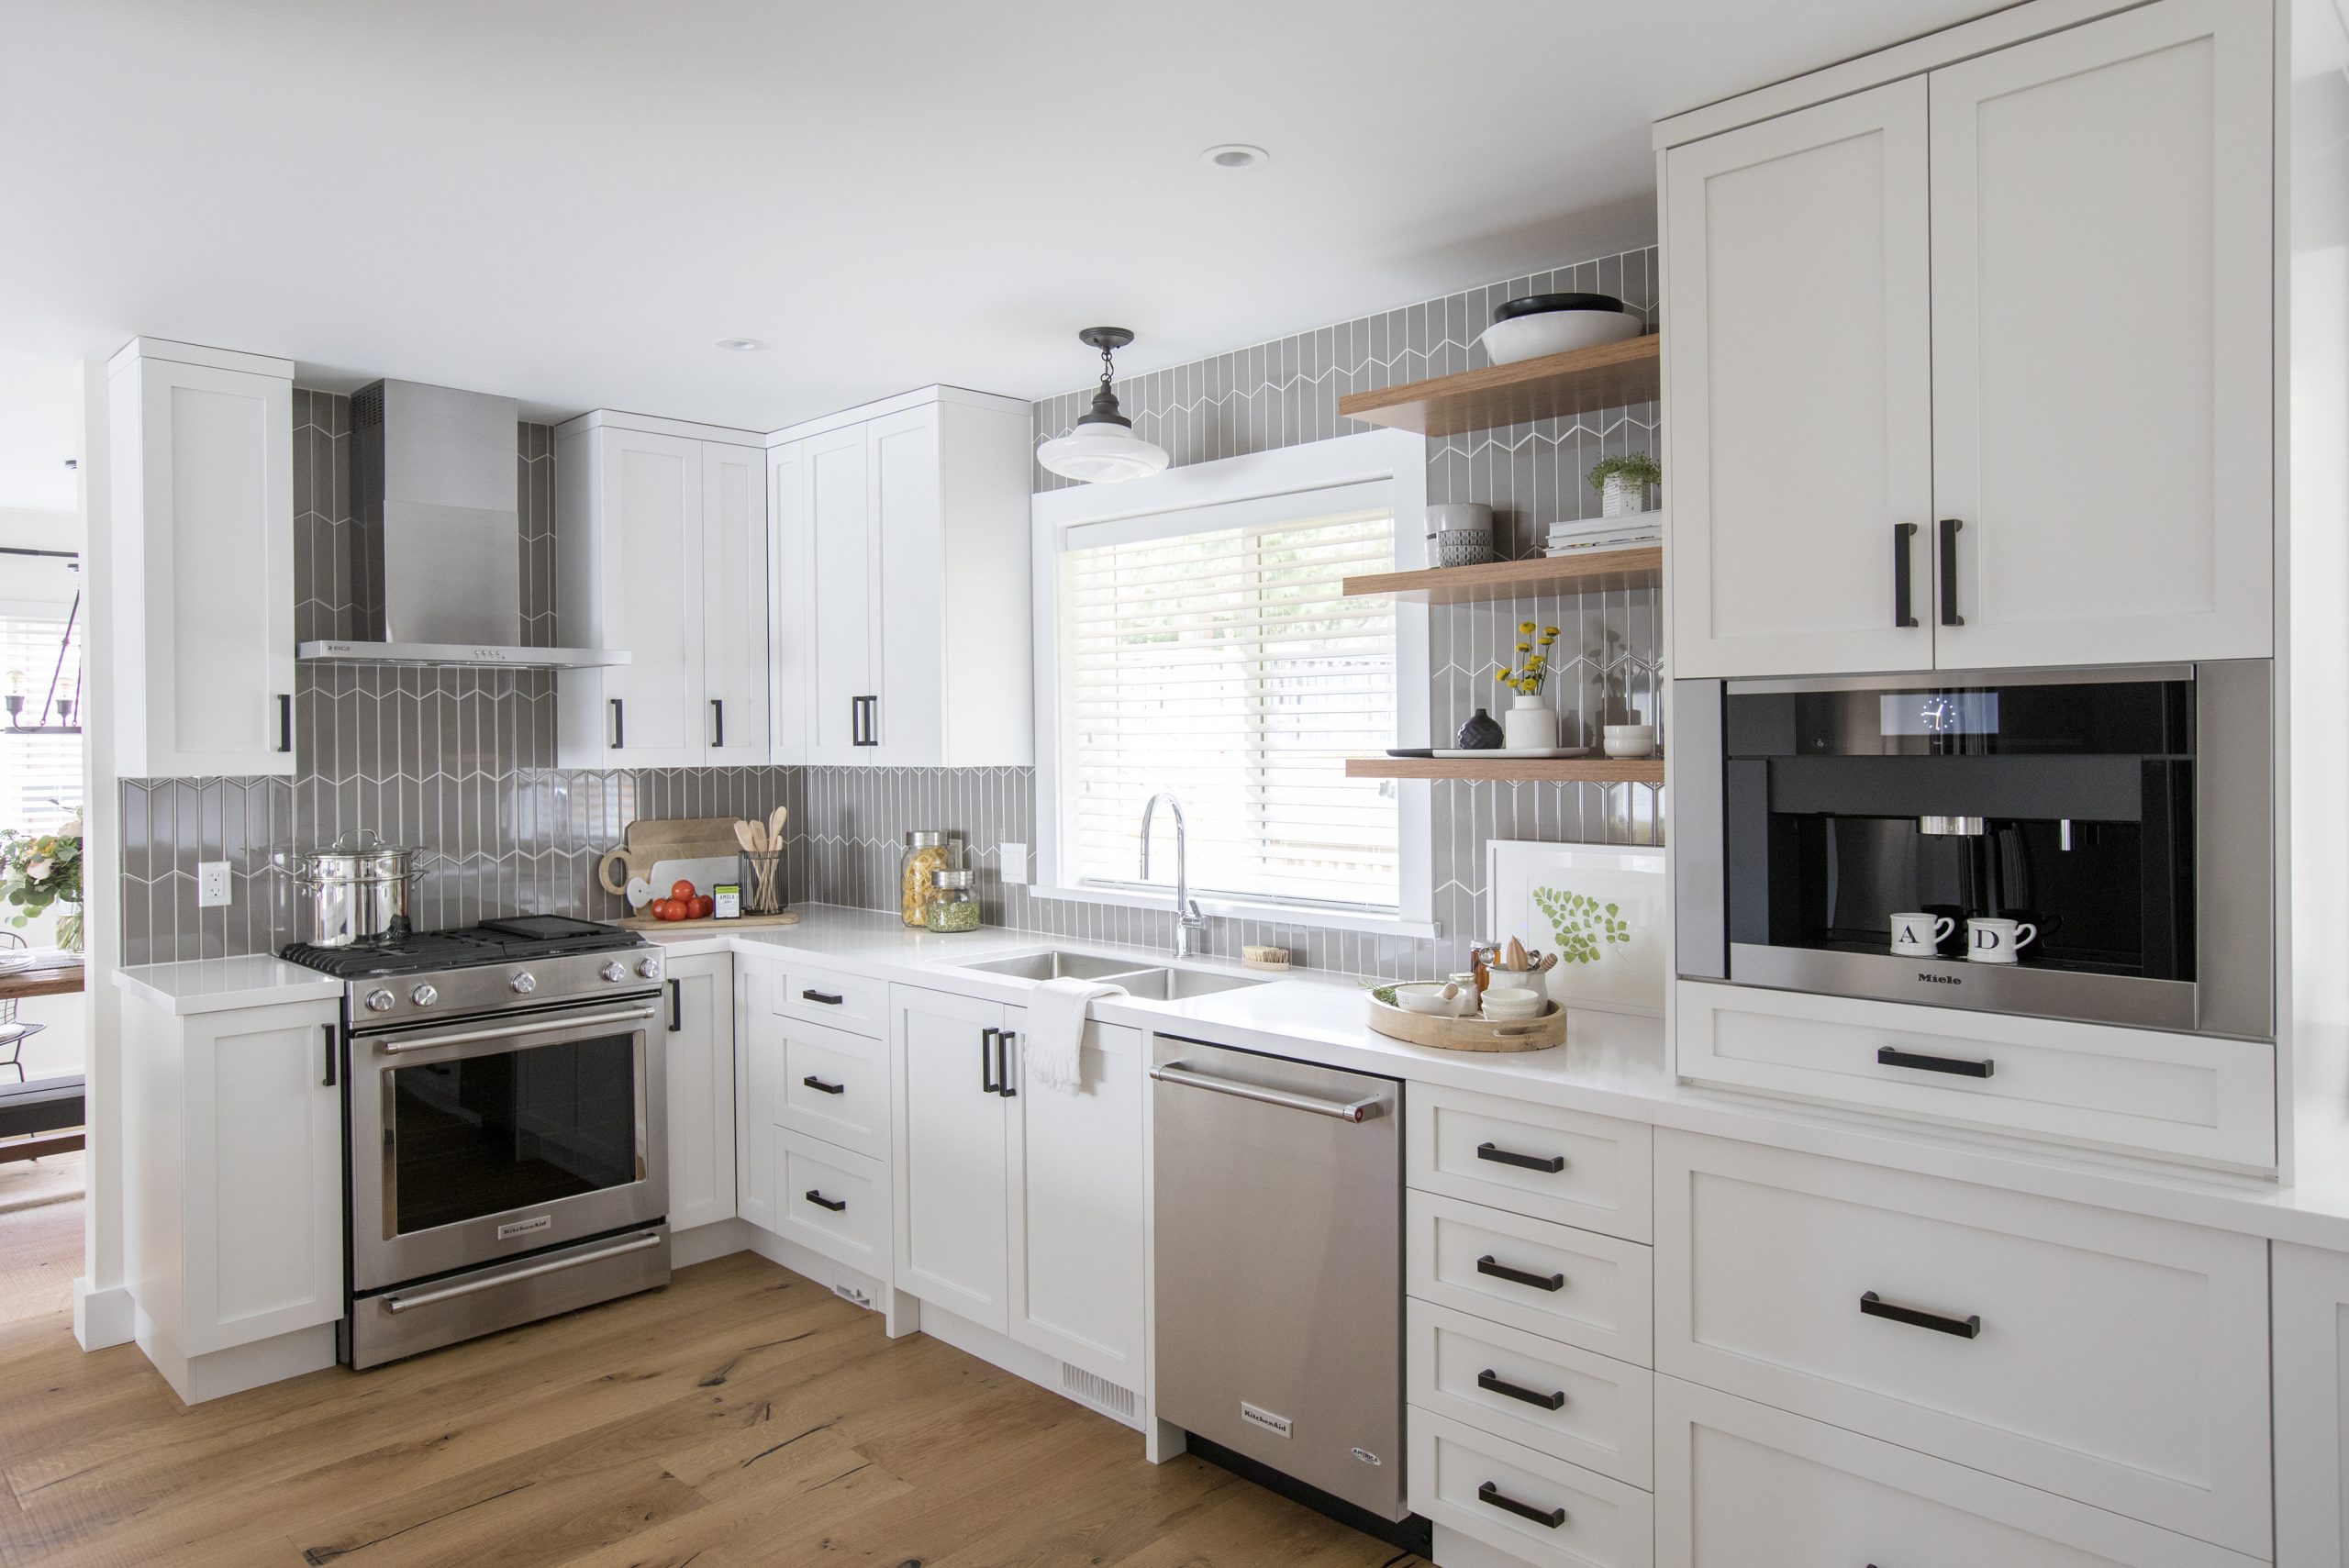 Modern white kitchen with grey tiled backsplash.